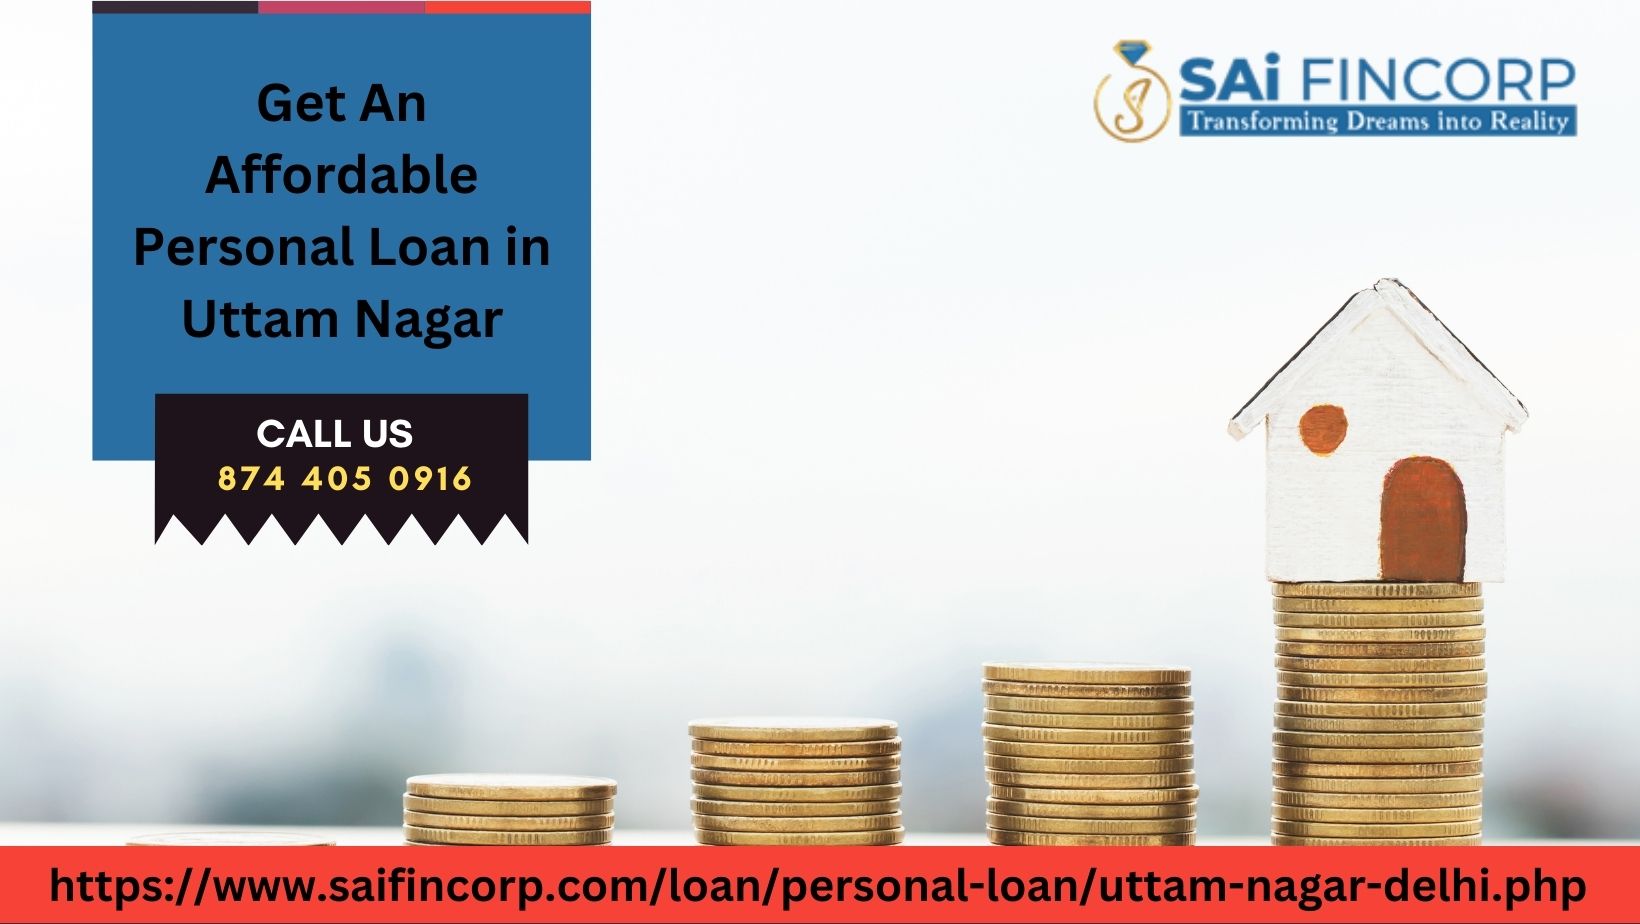 Get An Affordable Personal Loan in Uttam Nagar